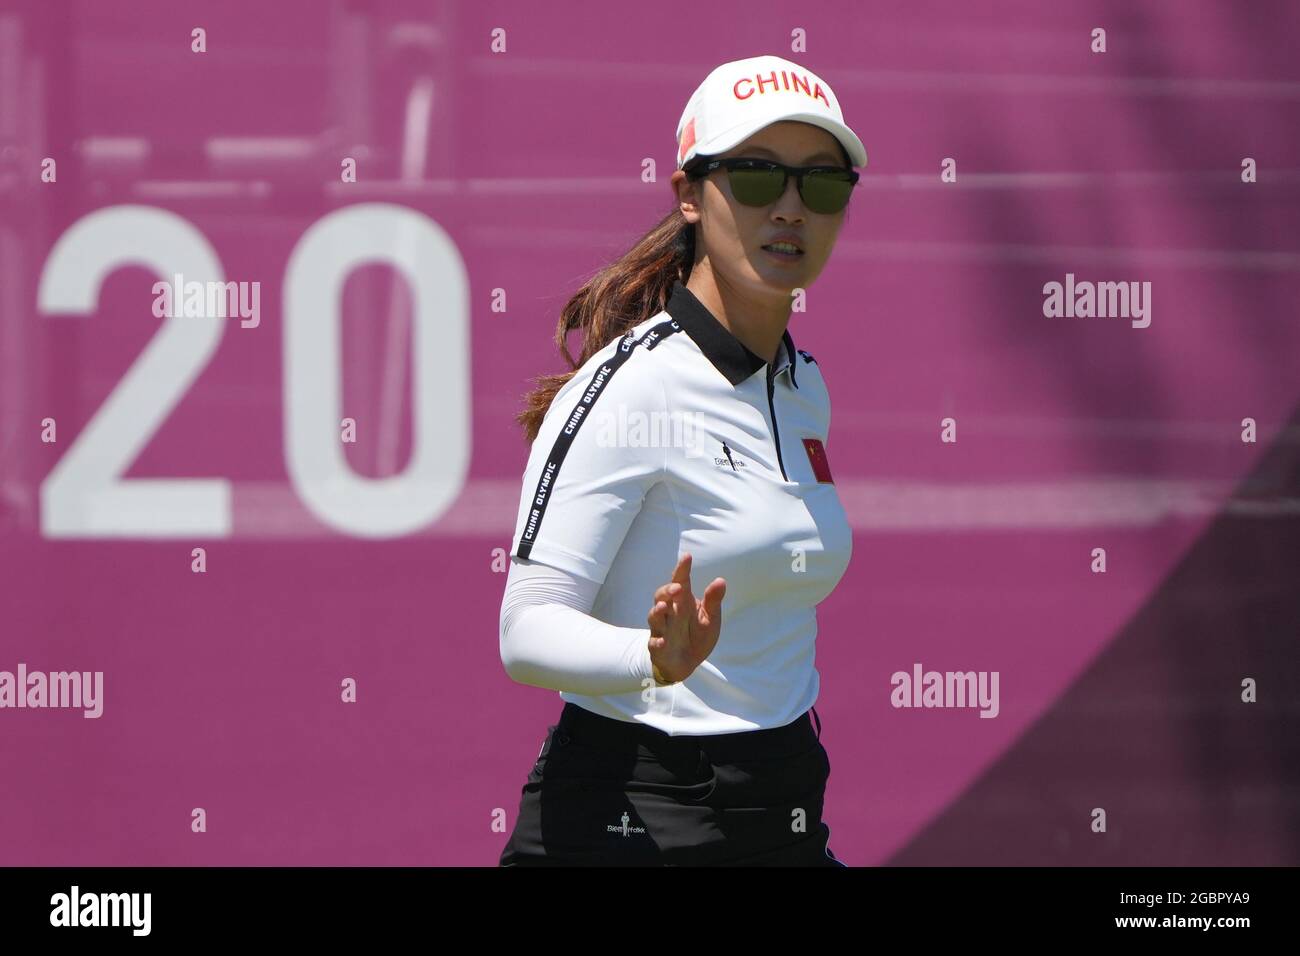 (210805) -- SAITAMA, Aug. 5, 2021 (Xinhua) -- China's Lin Xiyu reacts during the women's individual stroke play 2nd round of golf at the Tokyo 2020 Olympic Games in Saitama, Japan, Aug. 5, 2021. (Xinhua/Zheng Huansong) Stock Photo